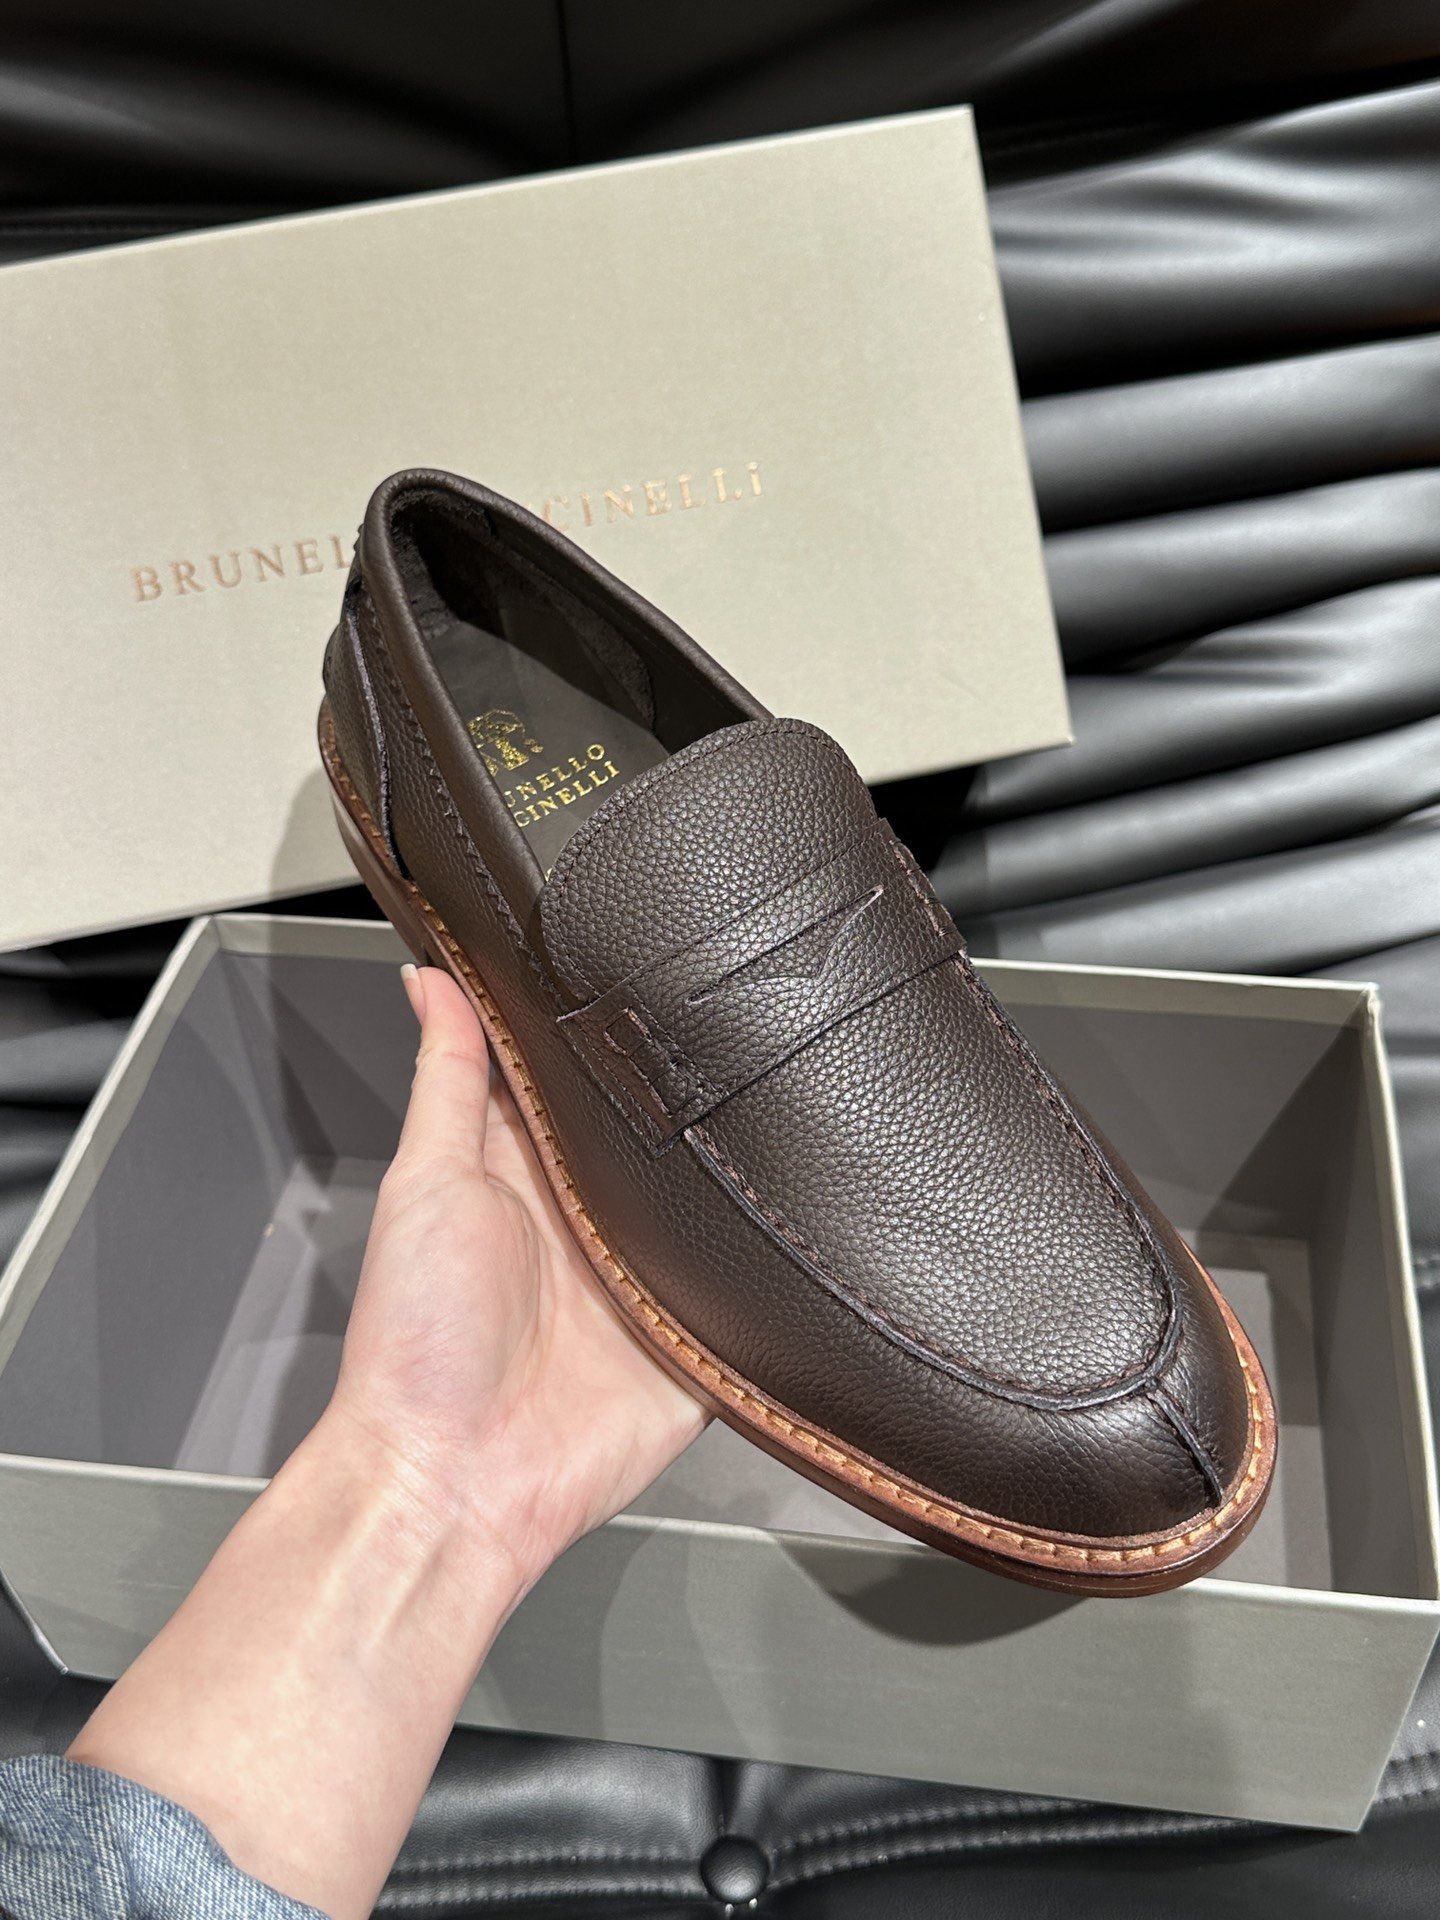 BrunelloCucinelli真皮大底皮鞋高端男士经典乐福鞋原版进口胎牛皮荔枝纹牛皮打造此款鞋型堪称